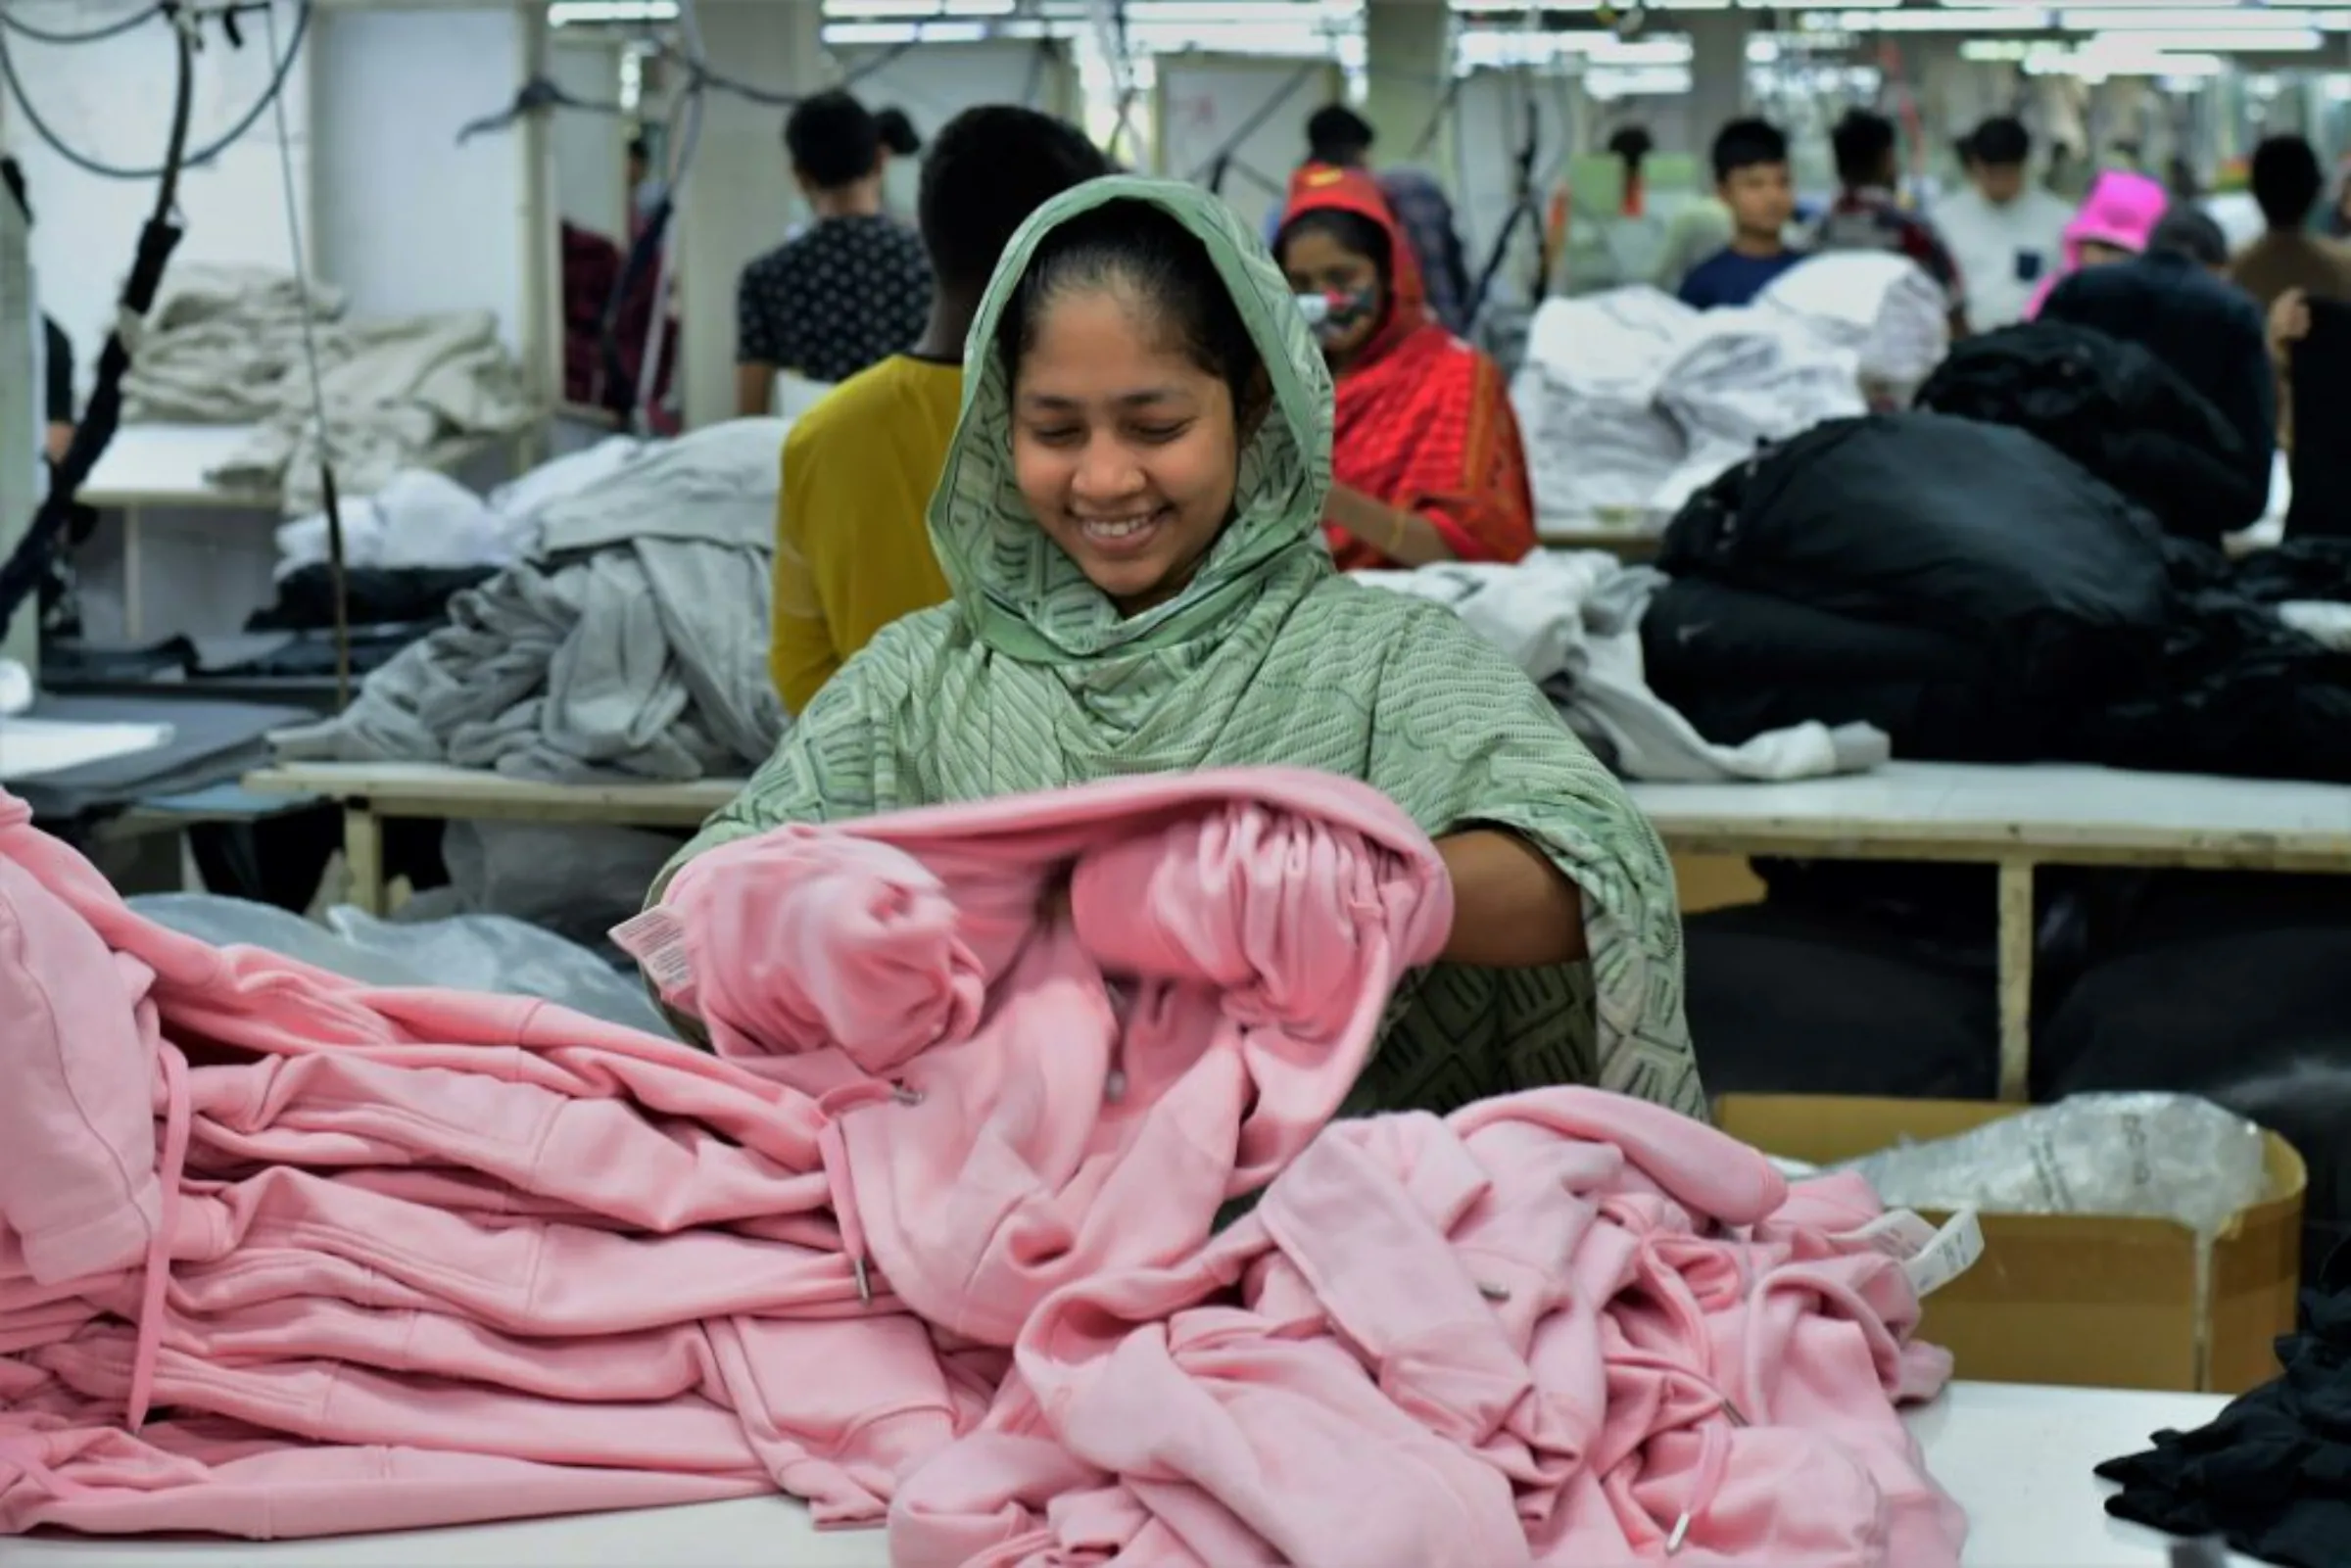 Worker Tanzila Begum checks the quality of clothing produced at the Plummy Fashions factory at North Narayanganj, Bangladesh, January 31, 2023